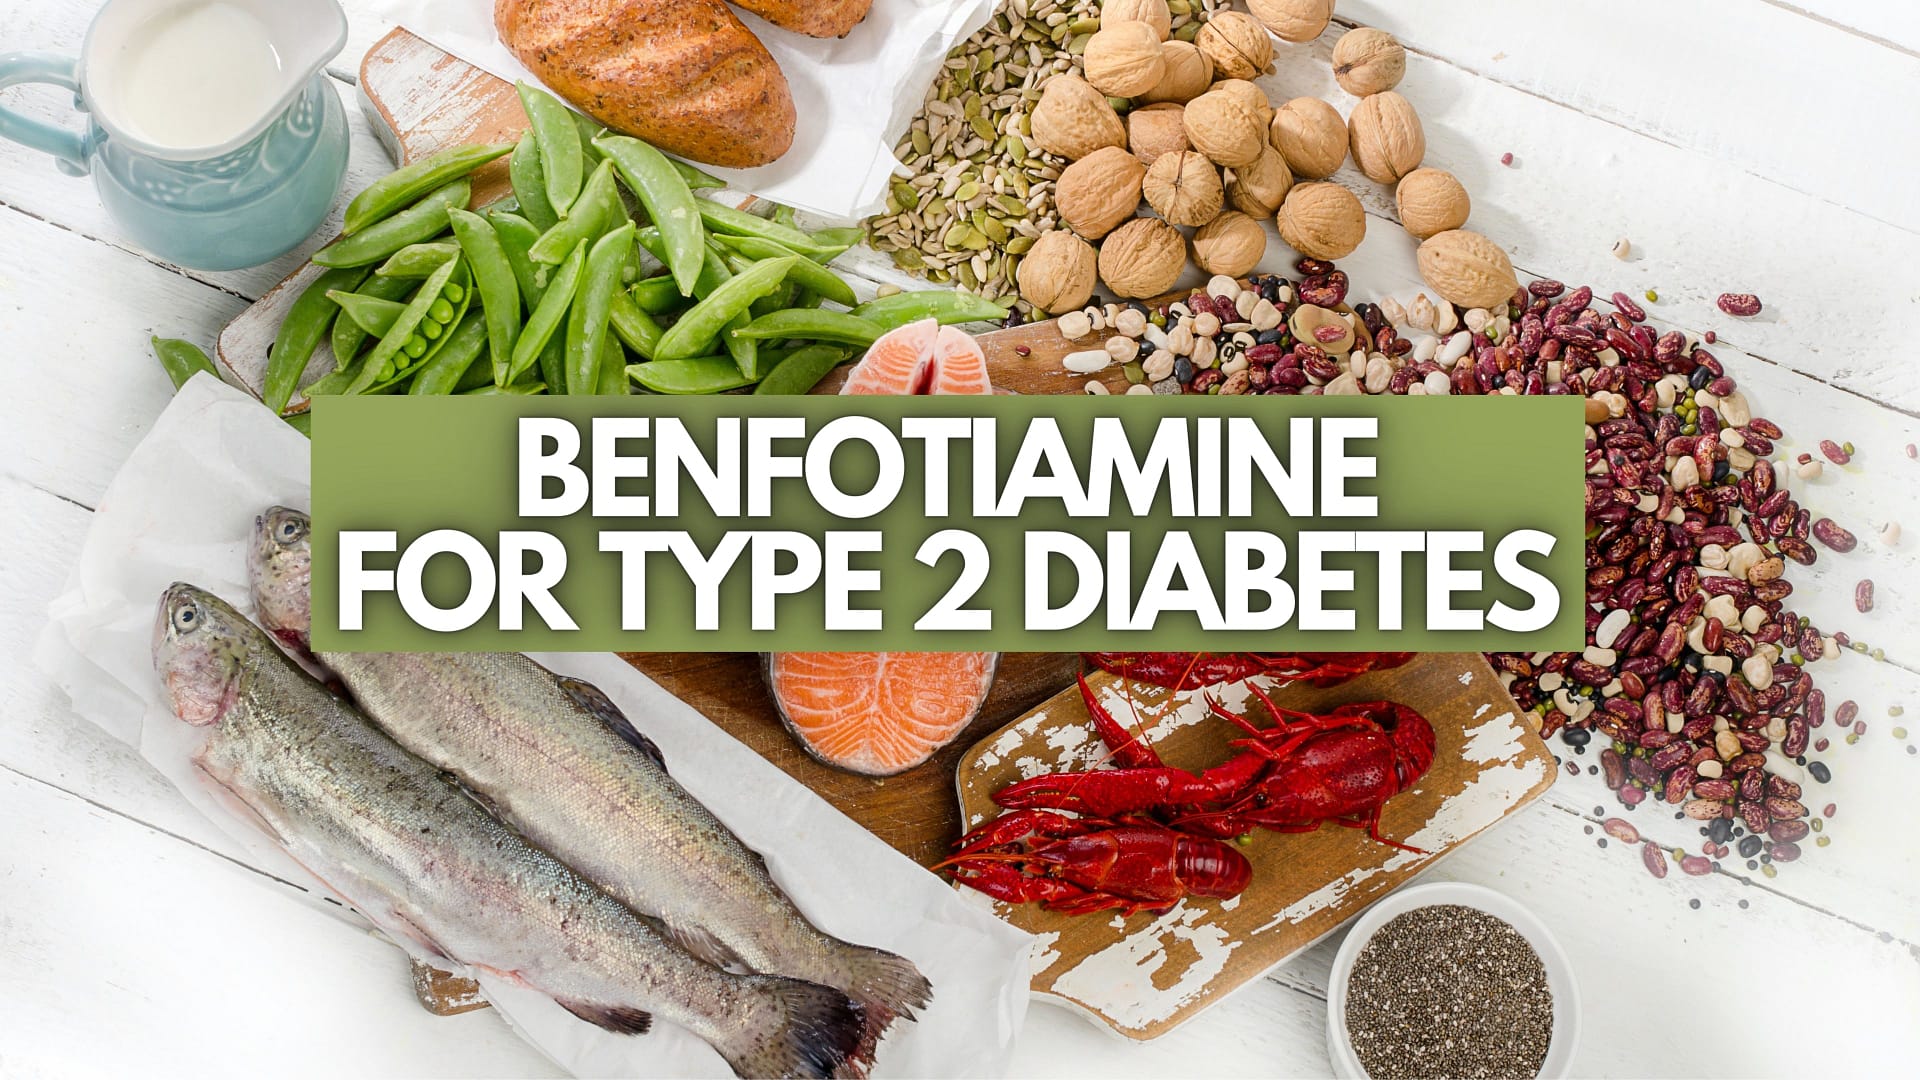 Benfotiamine for Type 2 Diabetes.